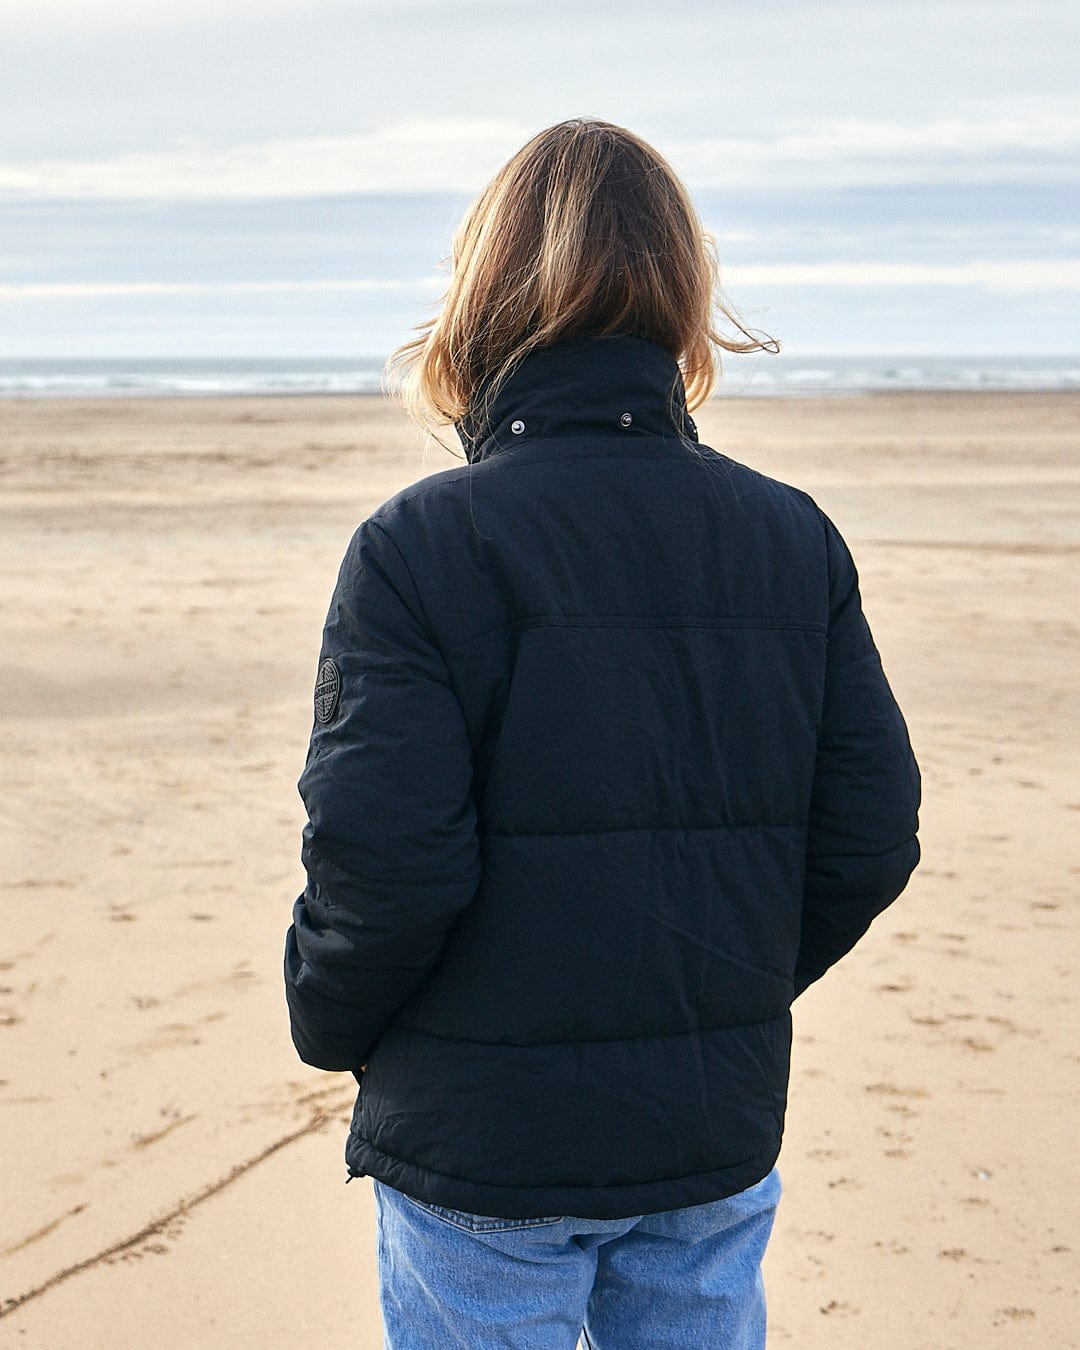 A woman standing on the beach wearing a Saltrock Aspen - Womens Short Puffer Jacket - Black with a detachable hood.